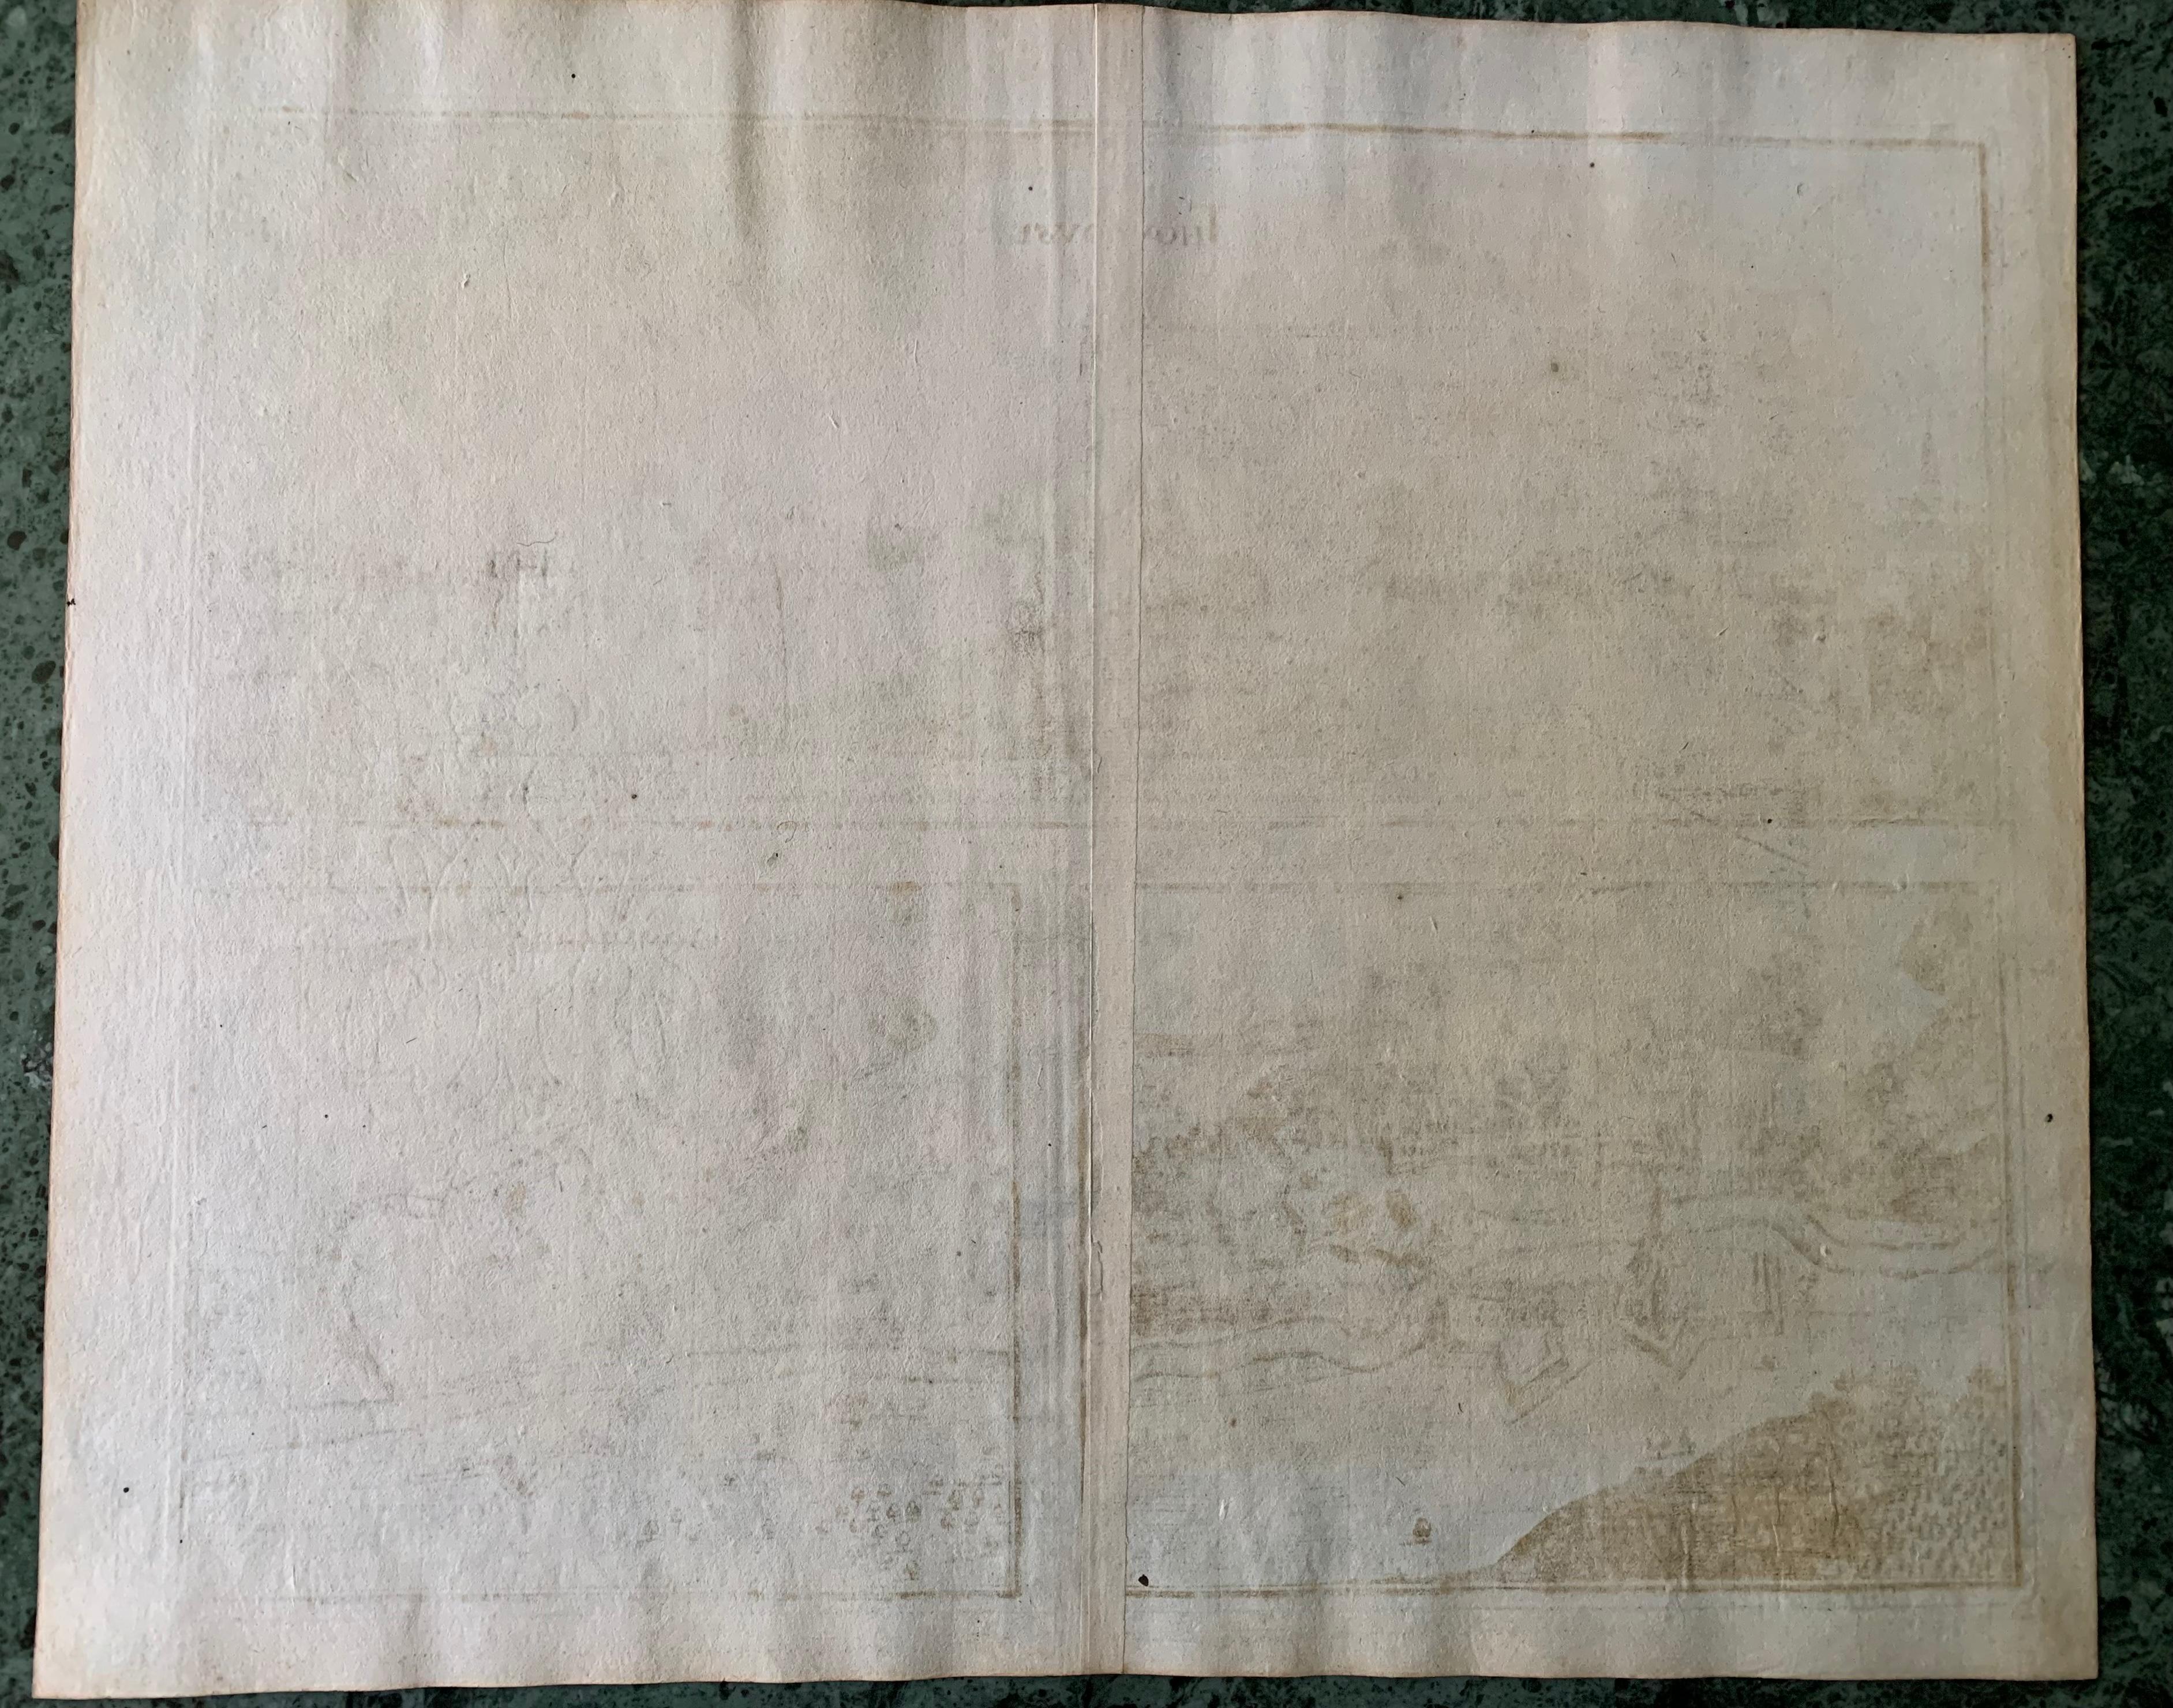 Toulouse, Savve, Sommieres, topografische Karte von Iohan Peeters, 17. Jahrhundert im Angebot 1